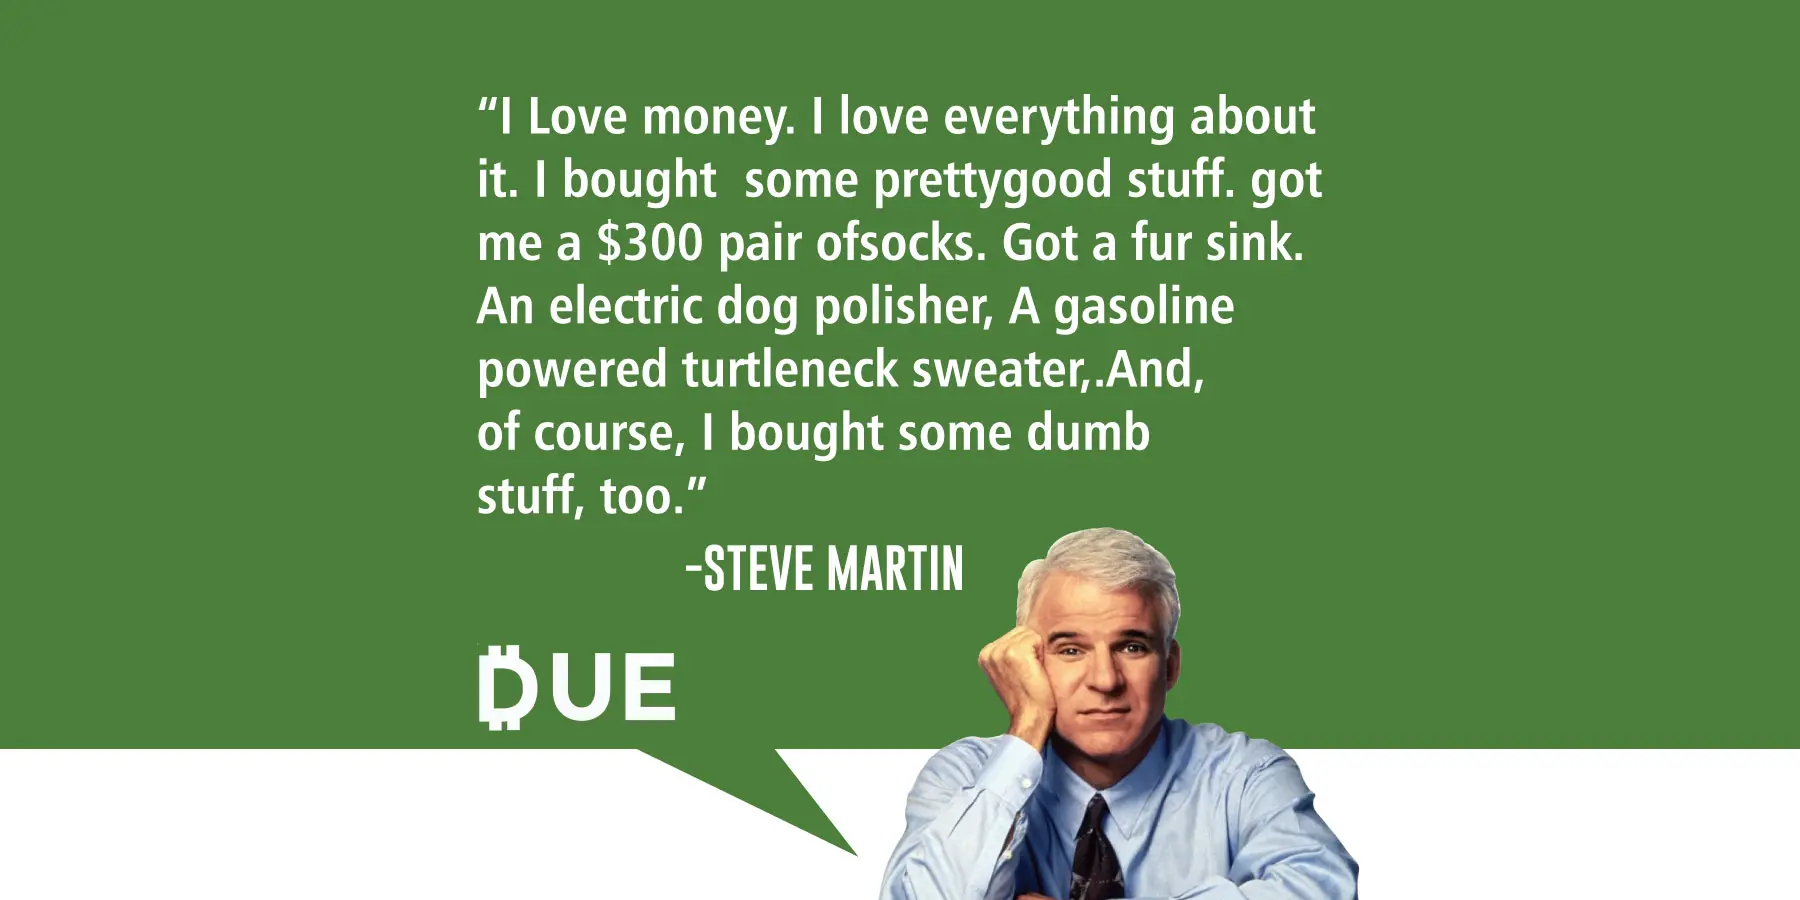 Steve Martin - Buying Stupid Stuff